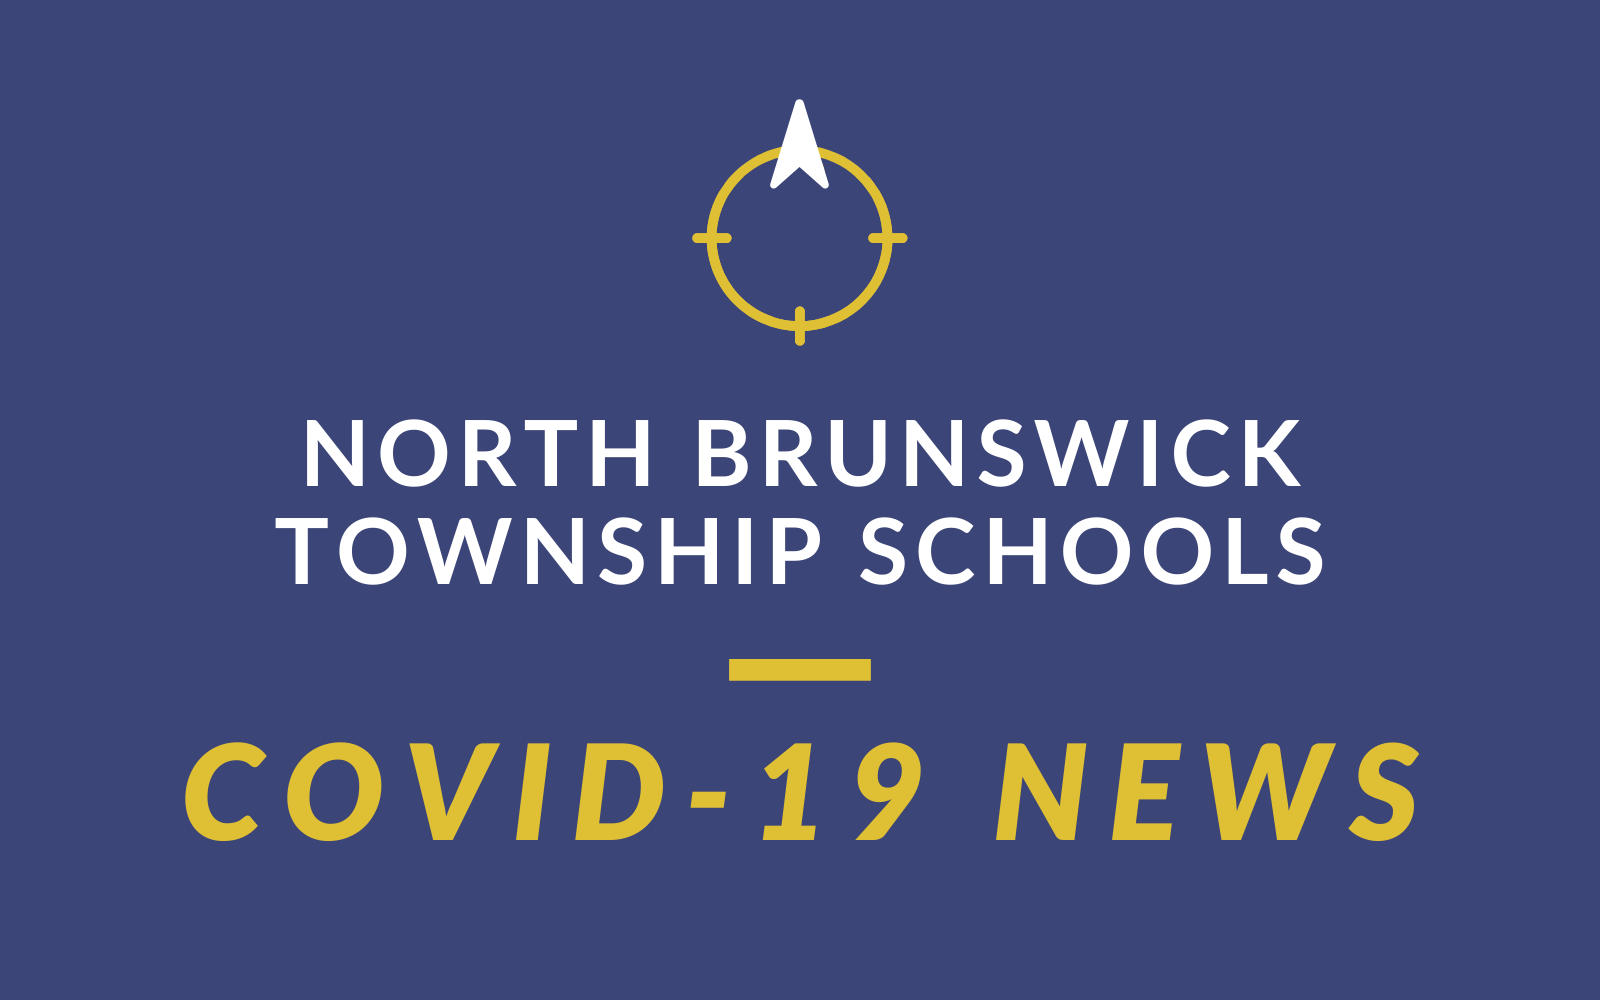 NORTH BRUNSWICK TOWNSHIP SCHOOLS - COVID-19 NEWS